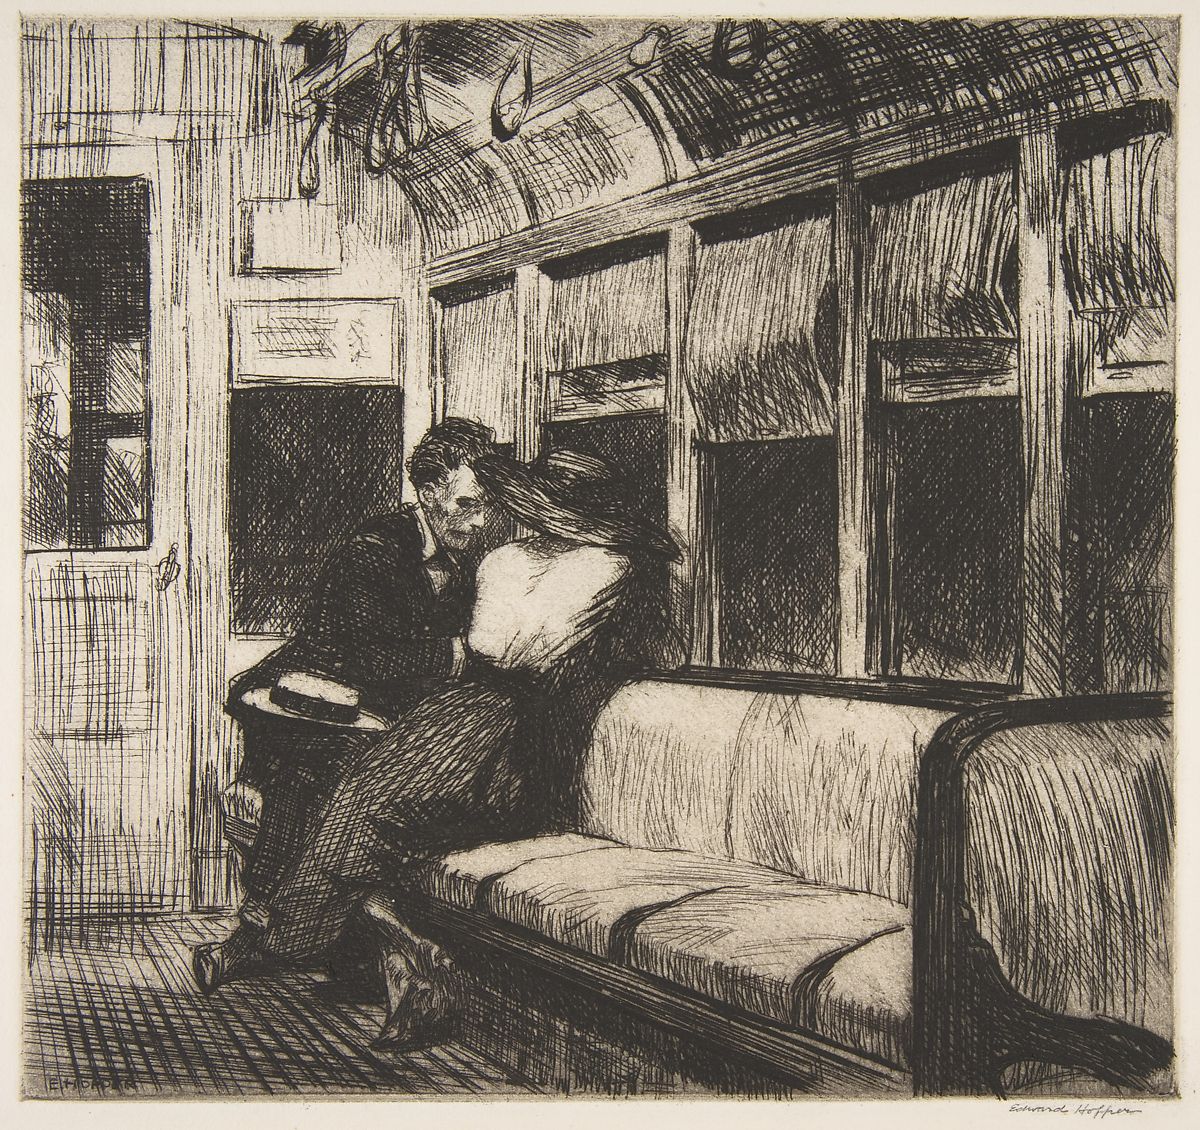 Night on the El Train, Ed. Hopper, 1918, Etching on copper, 7.5 x 8 in.